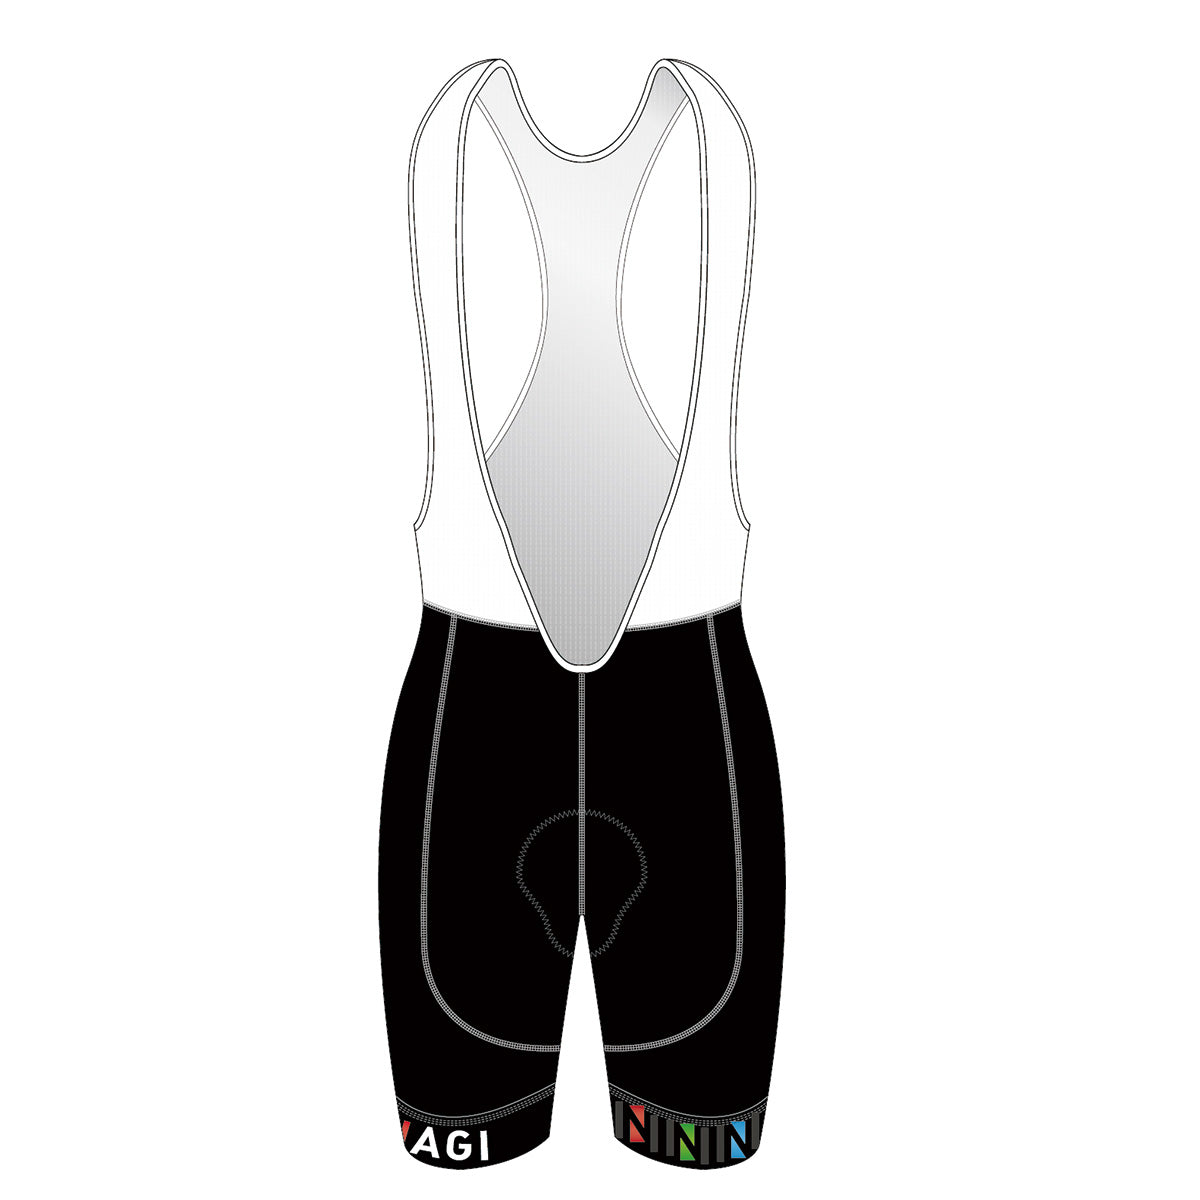 Team Nagi BLACK GOLD Cycling Bib Shorts